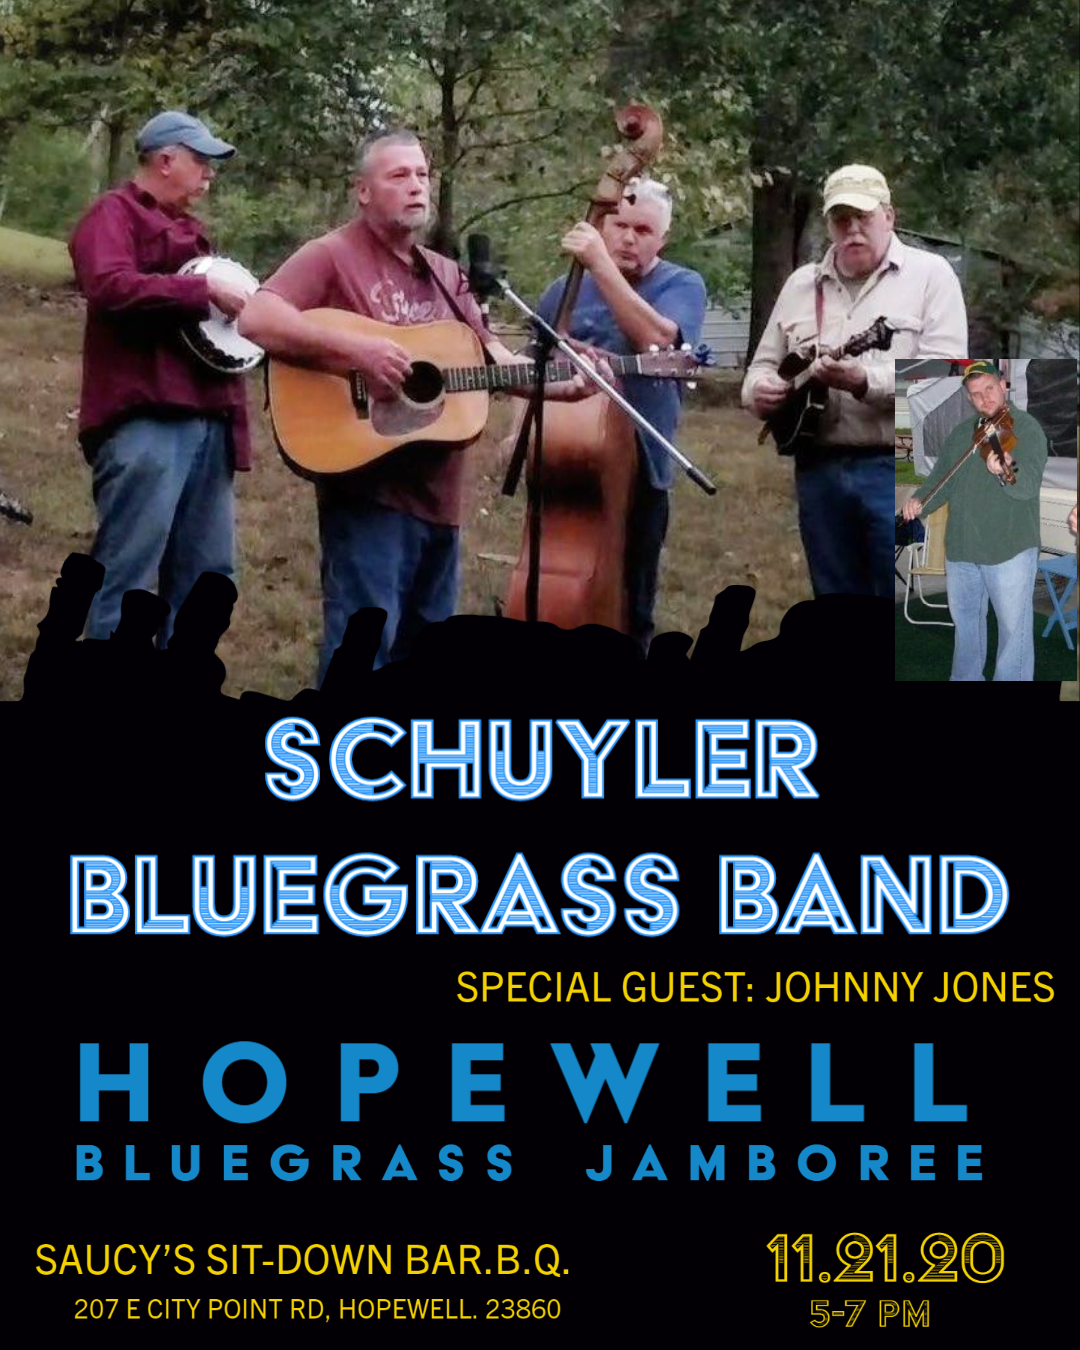 Hopewell Bluegrass Jamboree